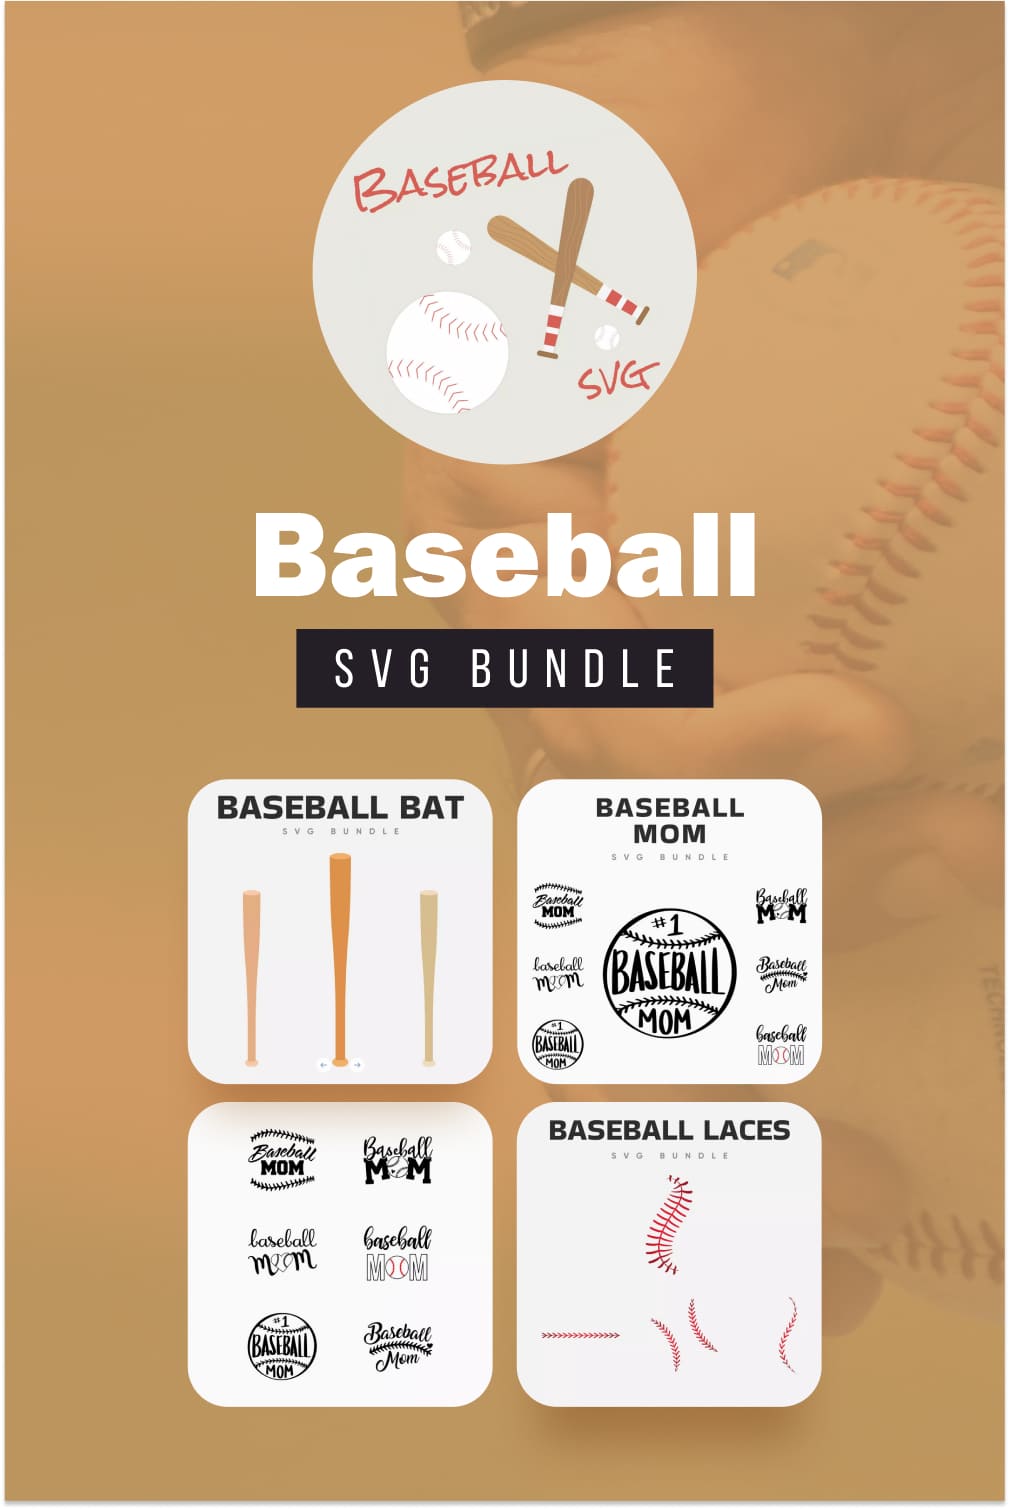 Baseball SVG Bundle Pinterest.